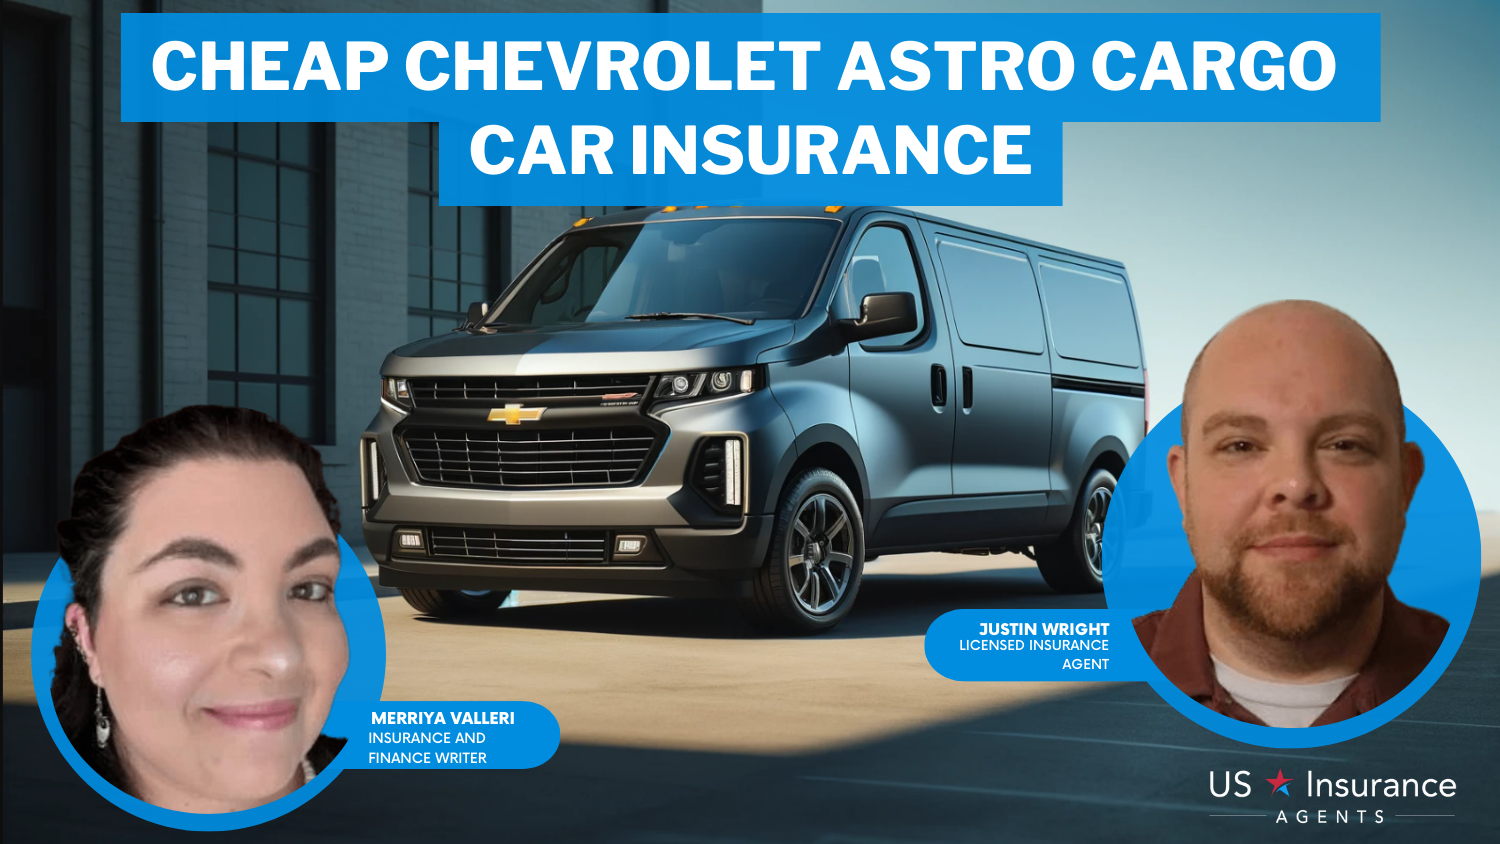 Cheap Chevrolet Astro Cargo Car Insurance: Progressive, Mercury, and Travelers.